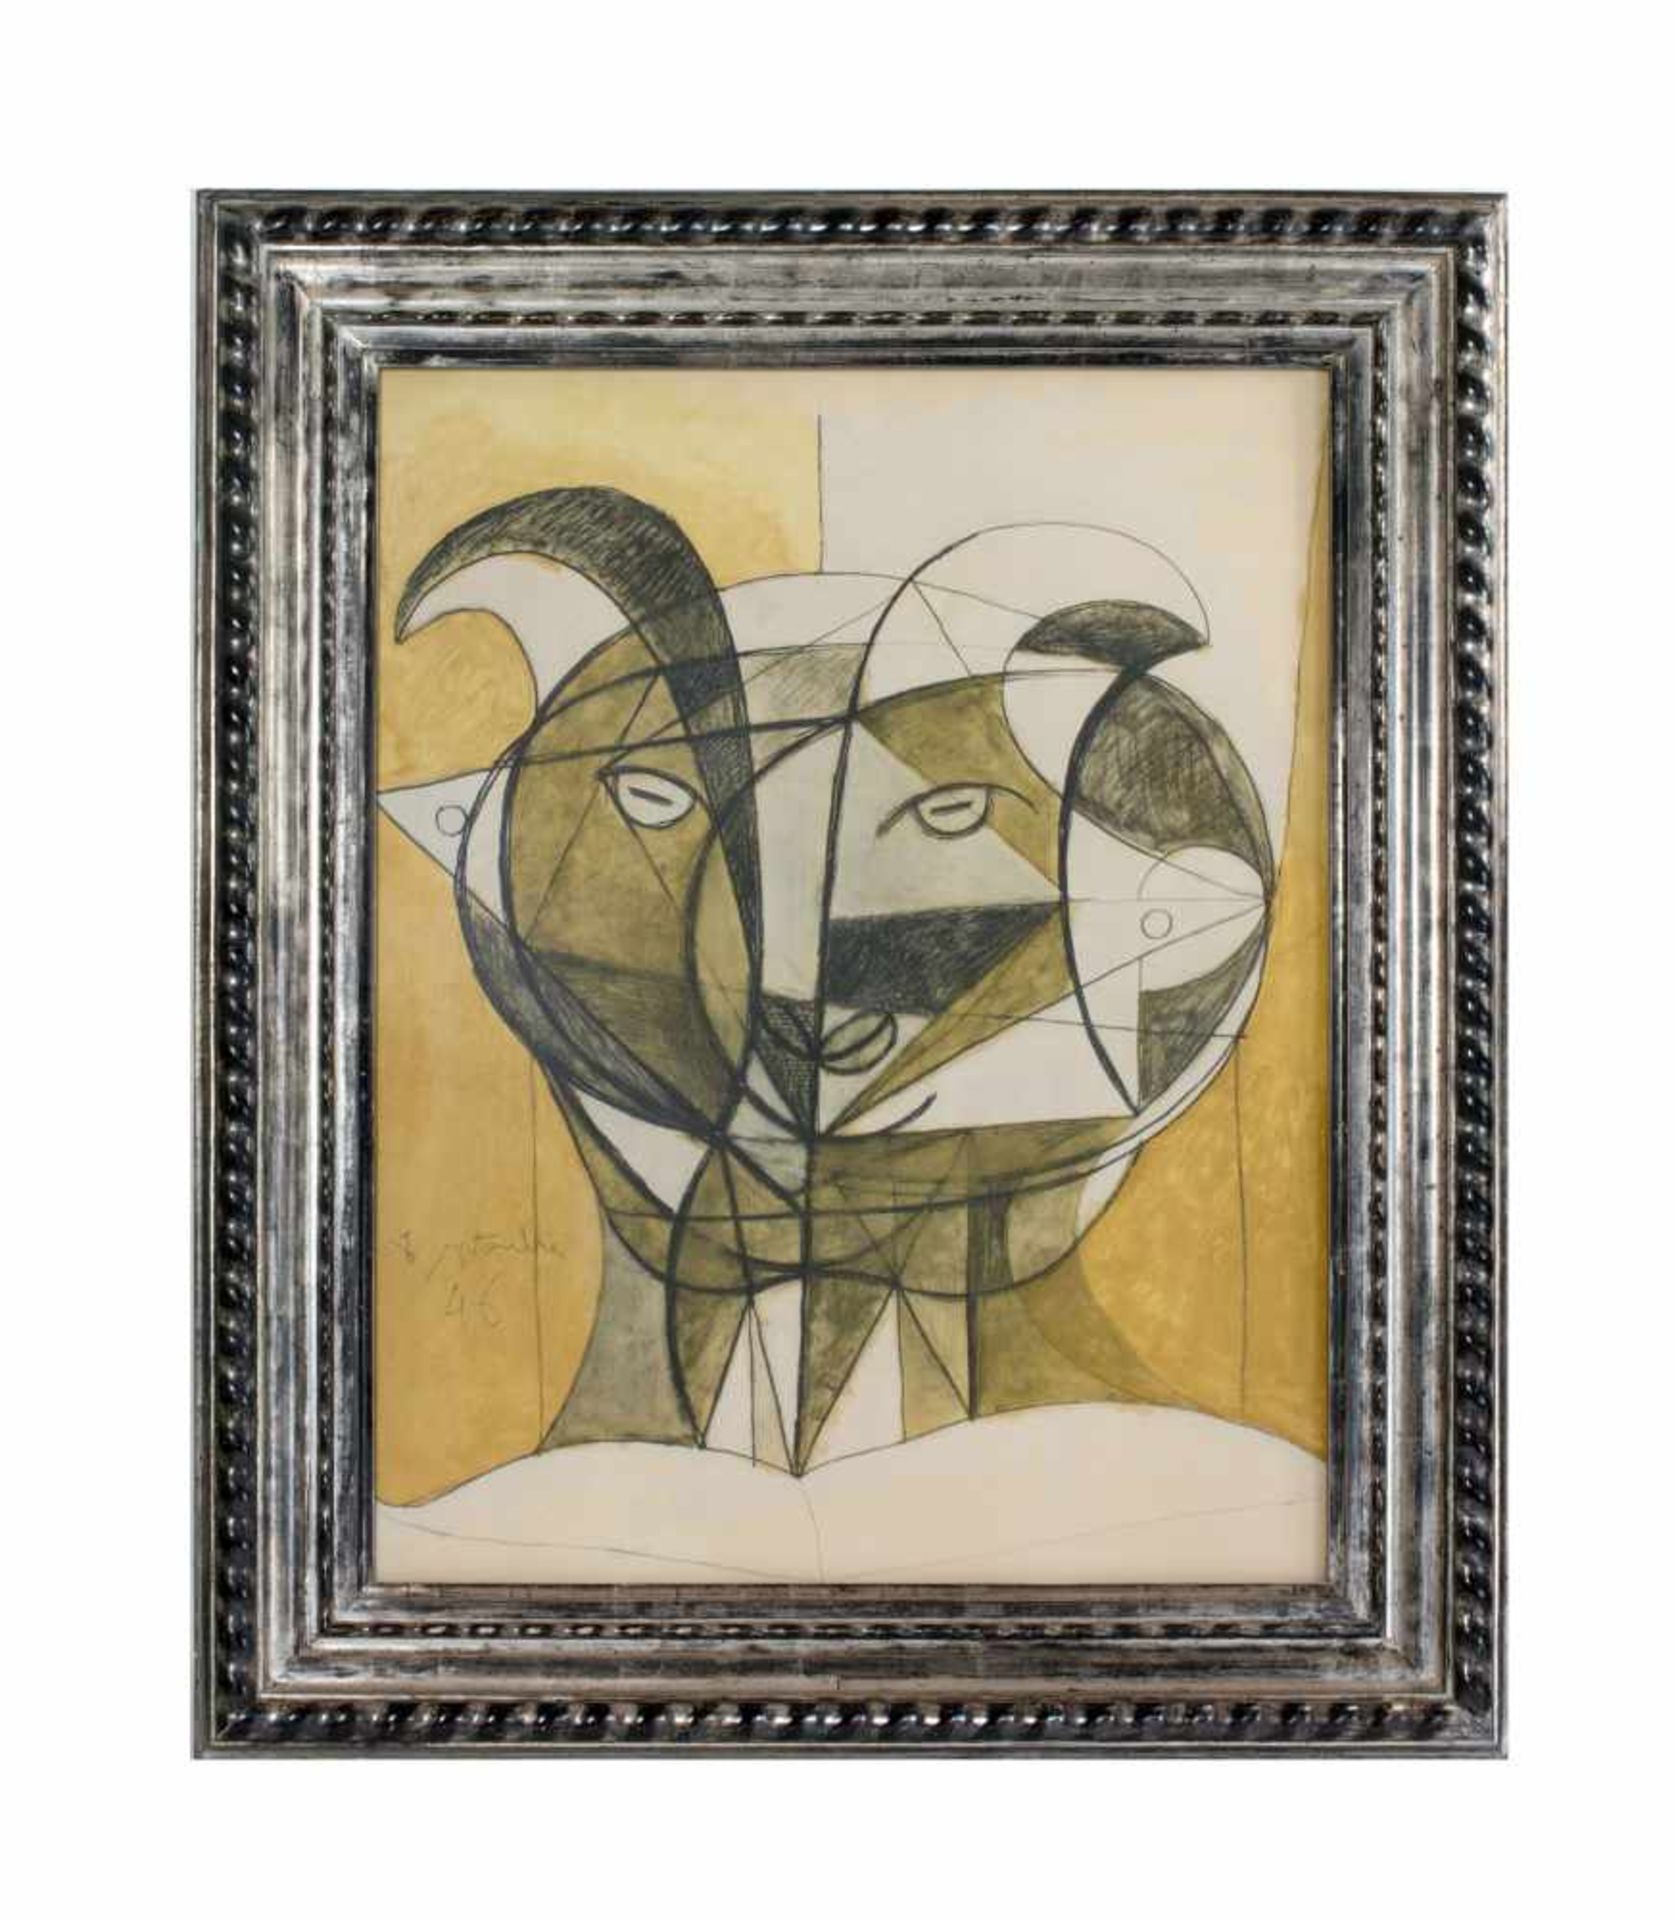 Pablo Picasso (1881 Malaga - 1973 Mougins) (F) Blatt aus dem 13-tlg. Portfolio Faunes et Flores d'